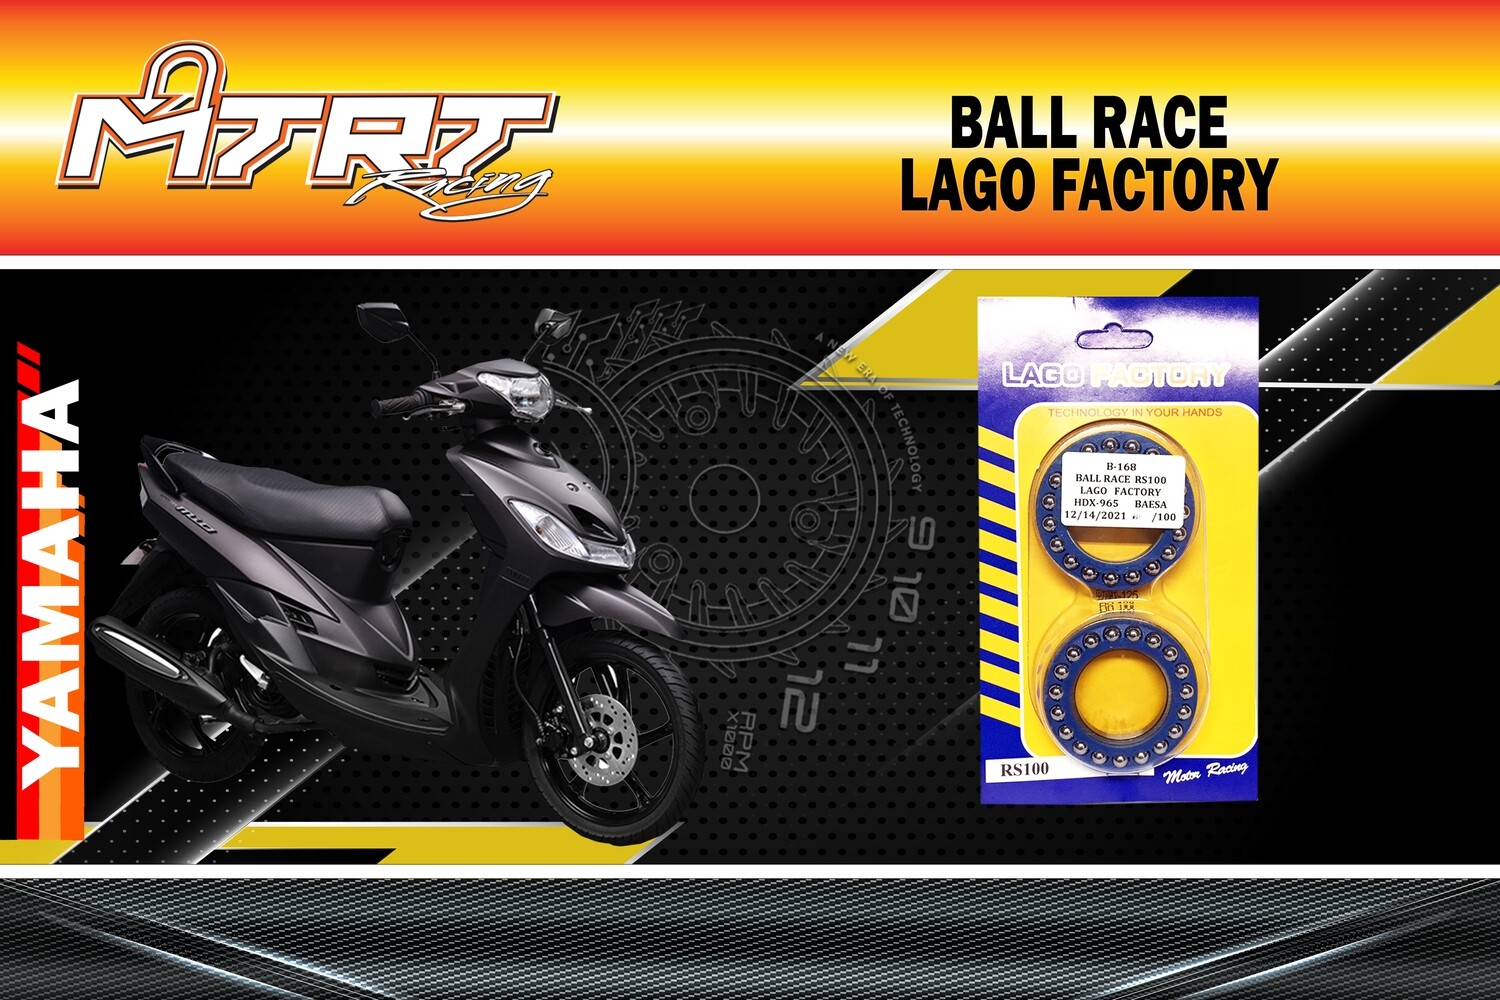 BALL RACE MIO/Mio-i125 "LAGO FACTORY"